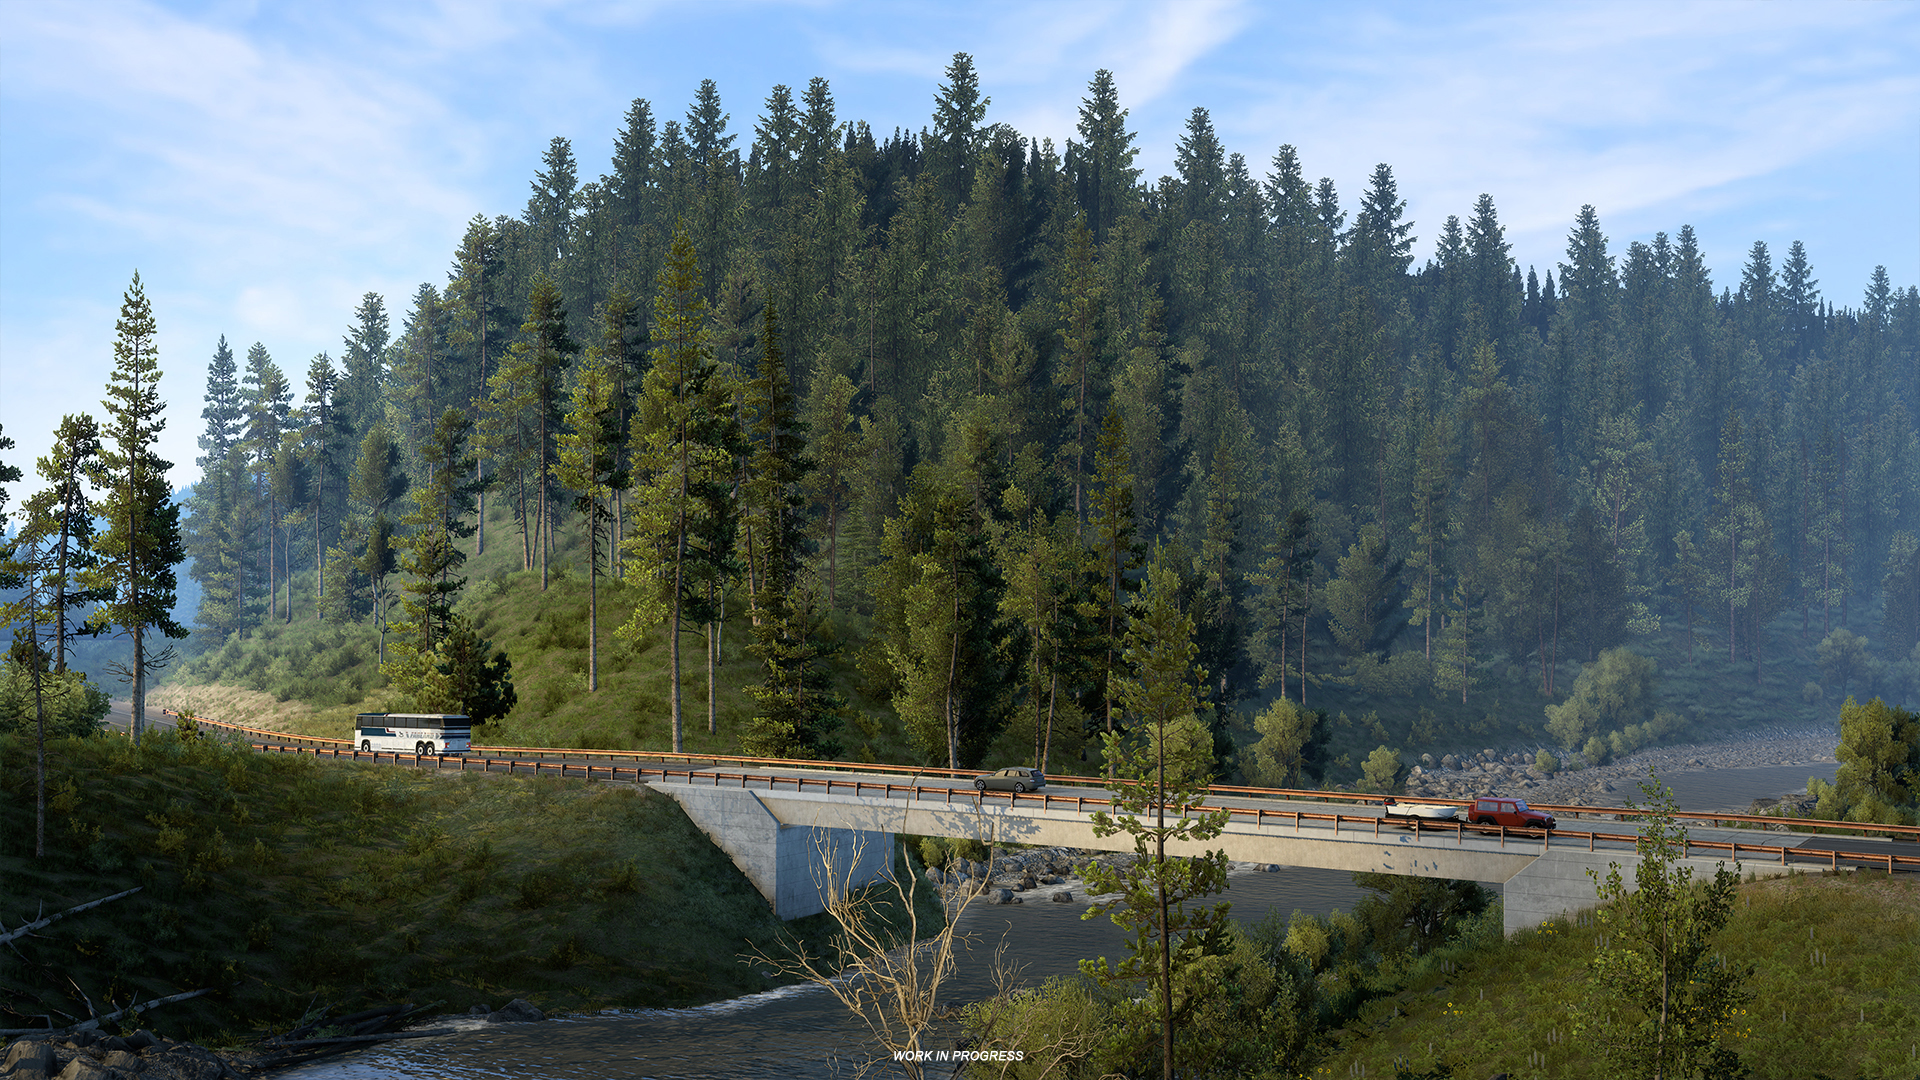 American Truck Simulator – Montana